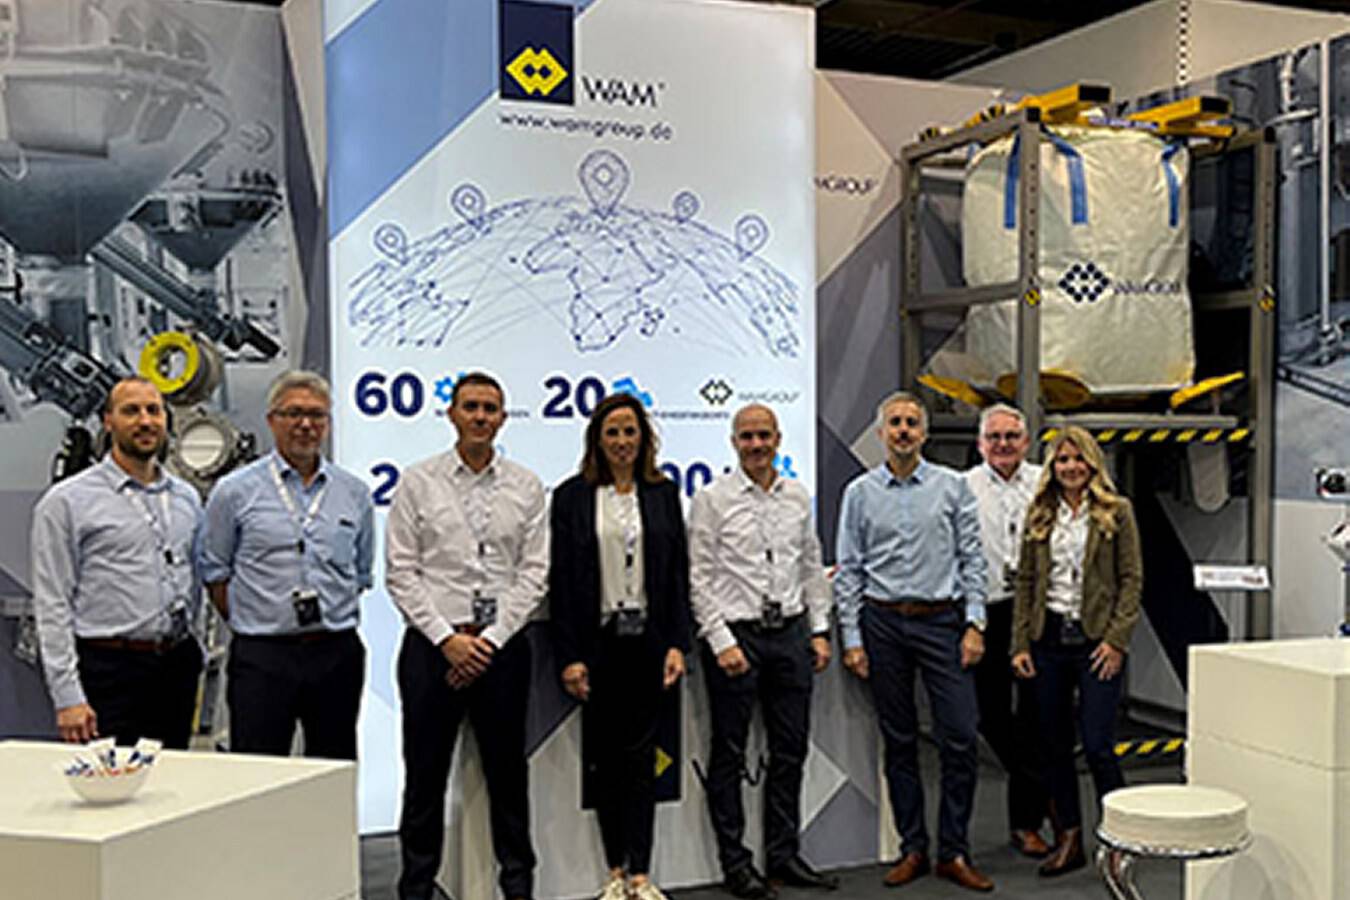 Impressions of WAM GmbH at PowTech 2022